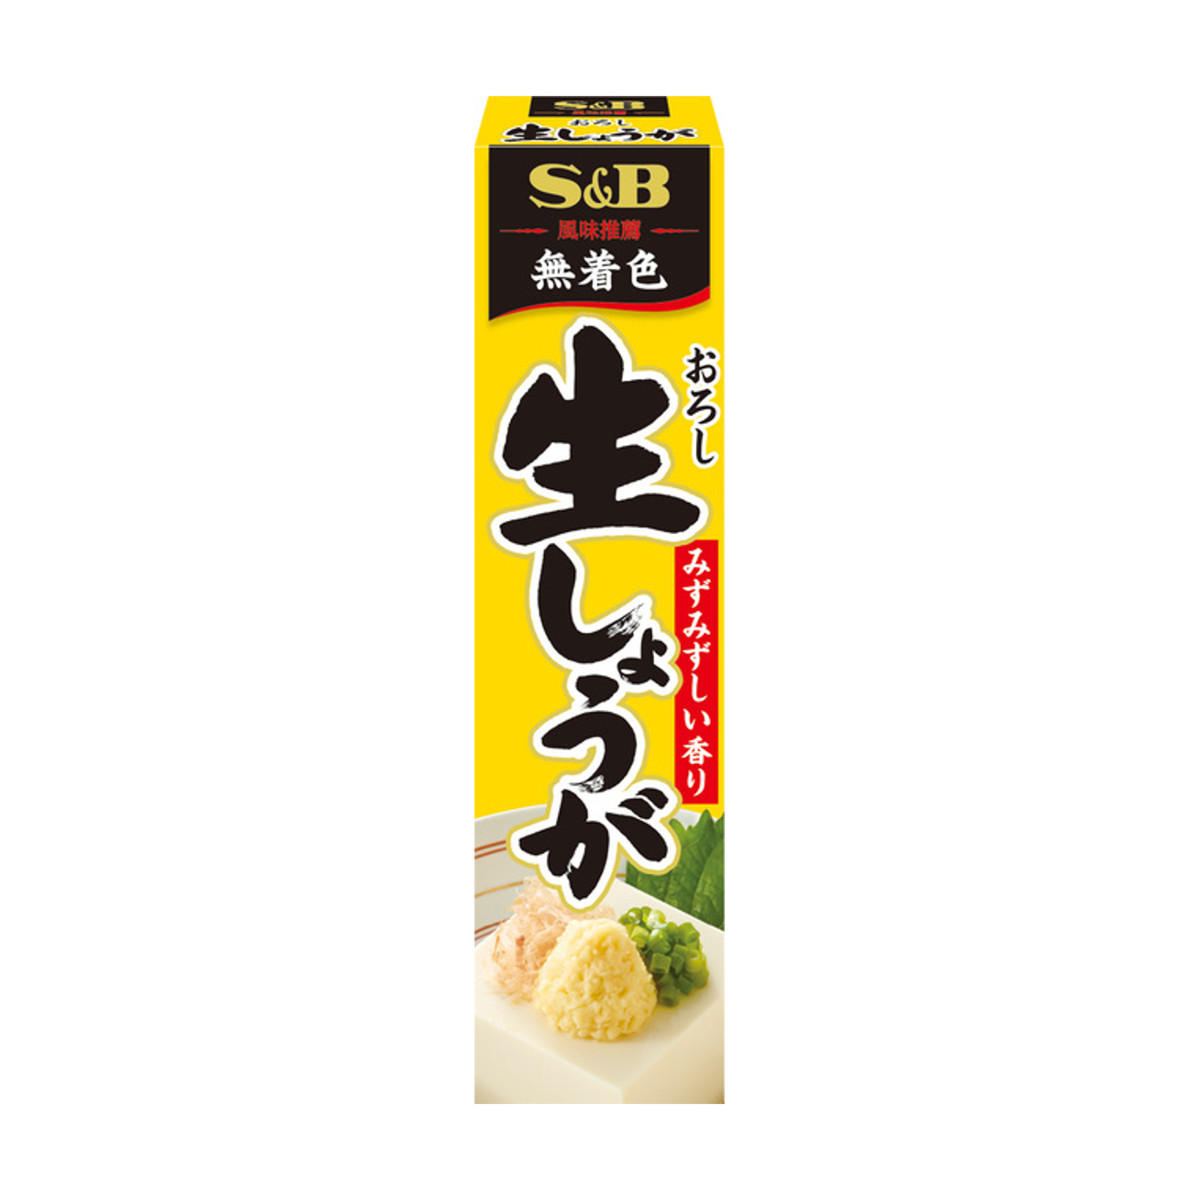 Gengibre em Pasta Japones Nama Shoga Oroshi S&B - 40g